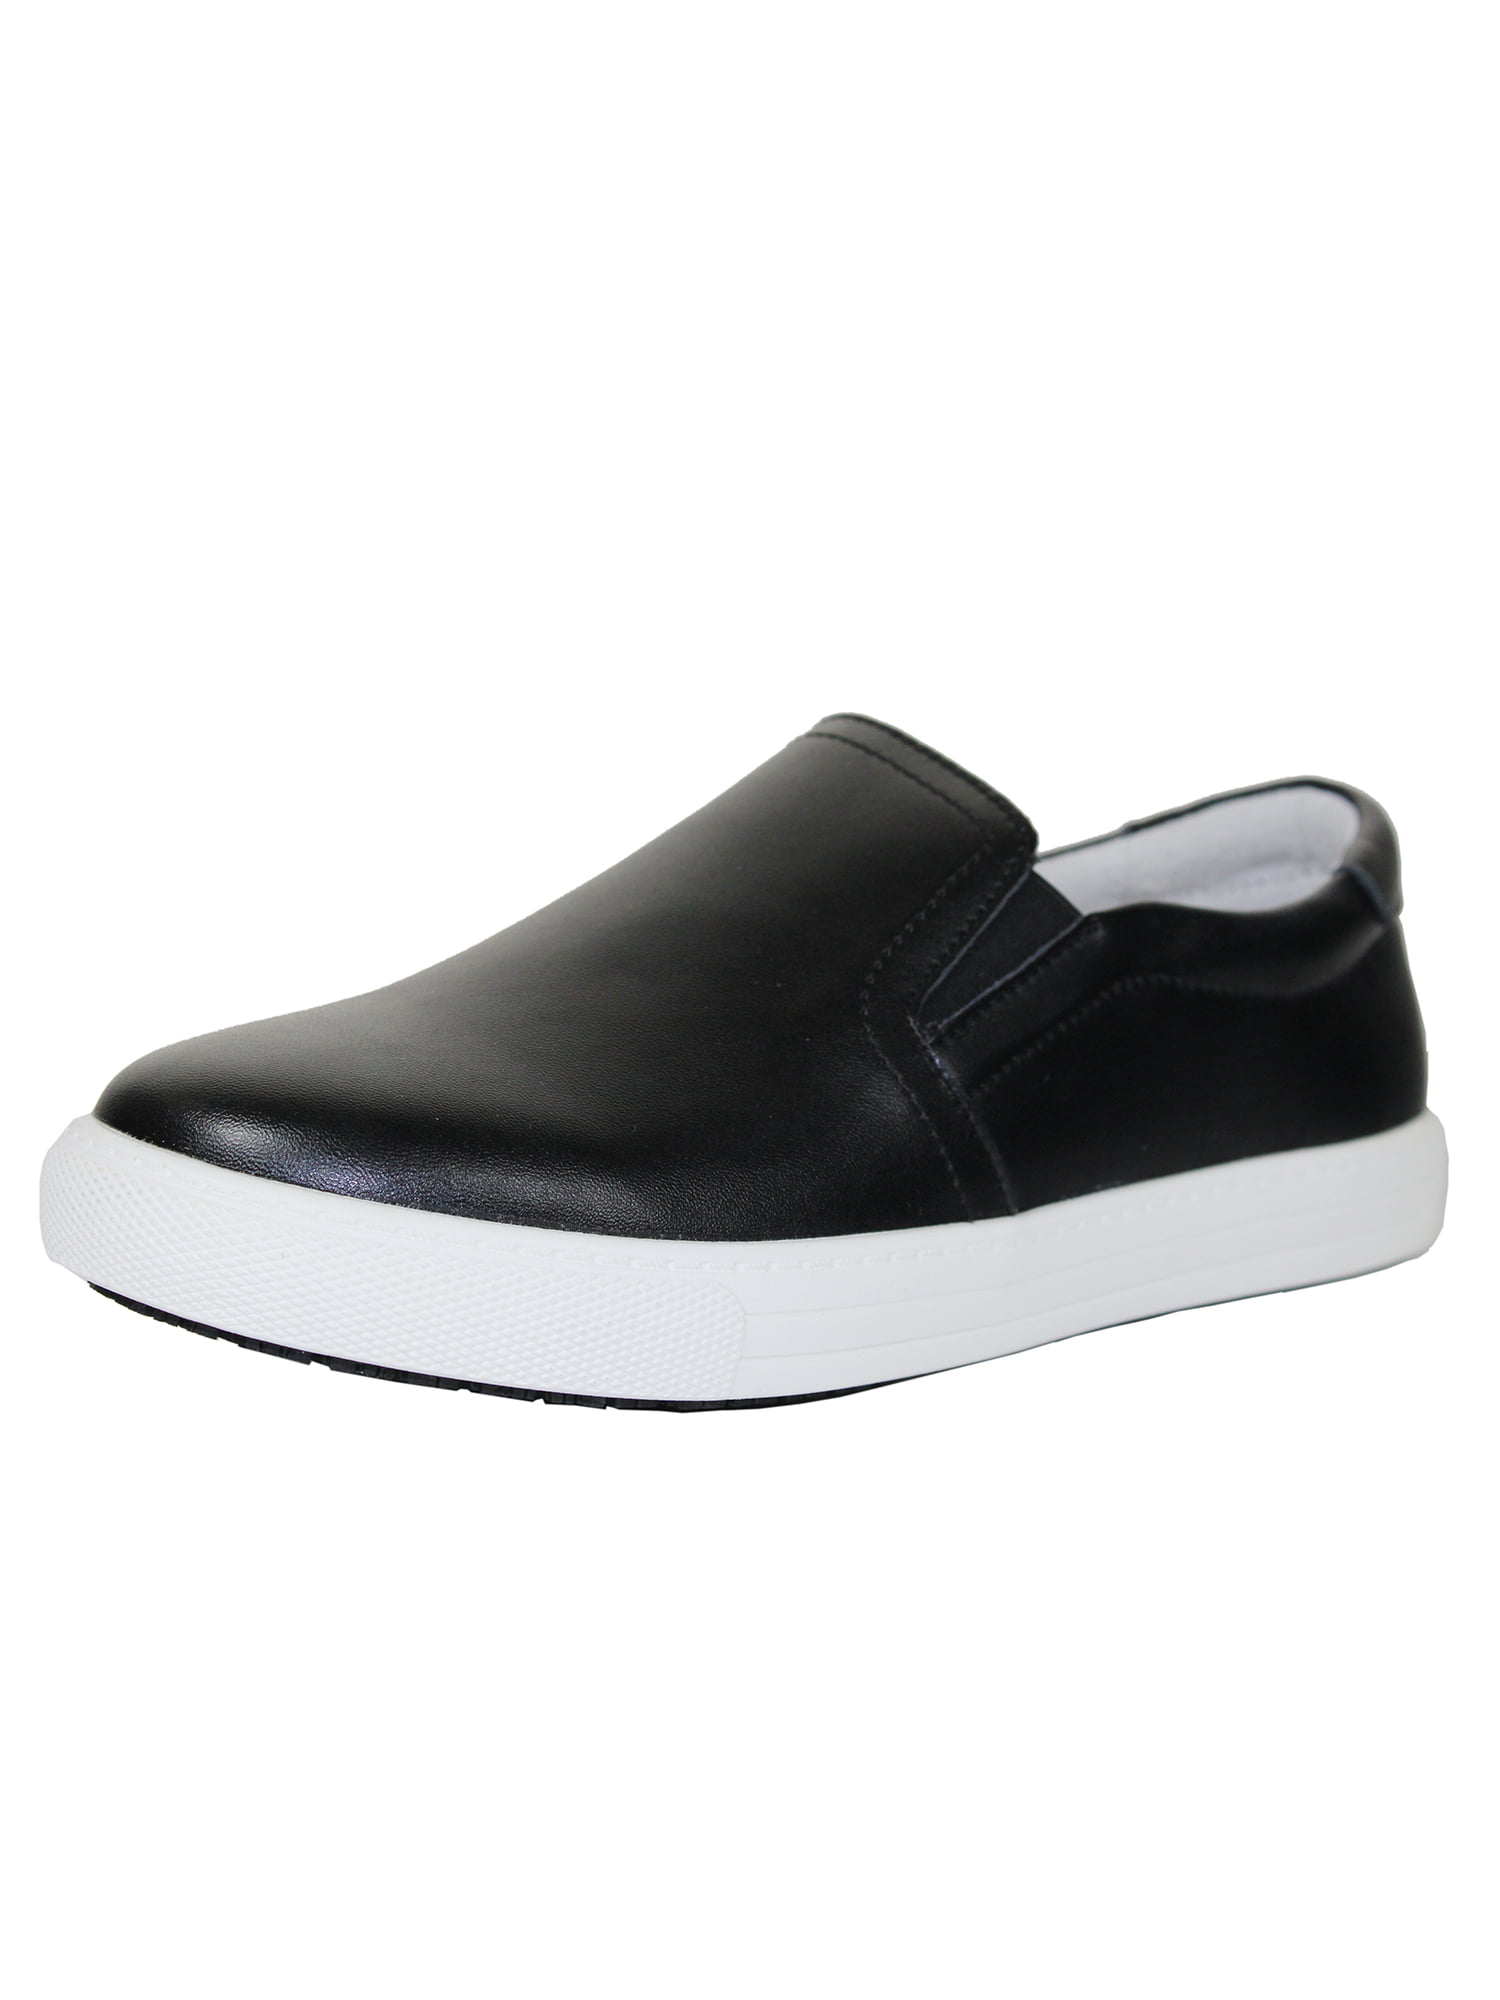 Womens Slip Resistant Shoe Casual Walking Comfortable Black Leather ...